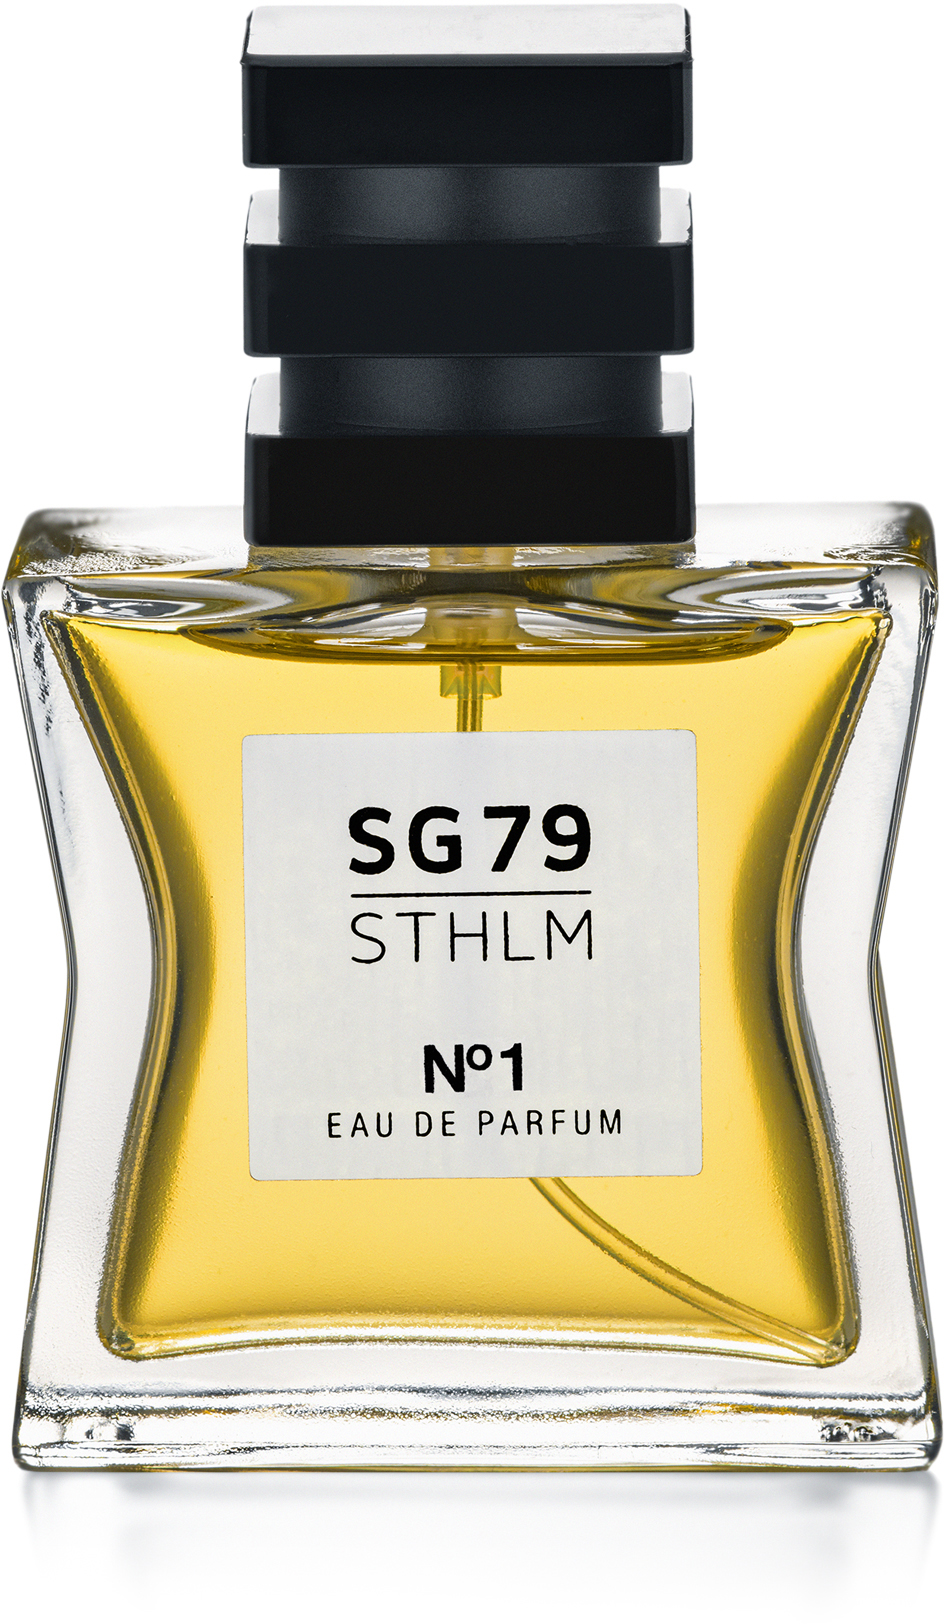 sg79|sthlm n° 1 woda perfumowana 30 ml   